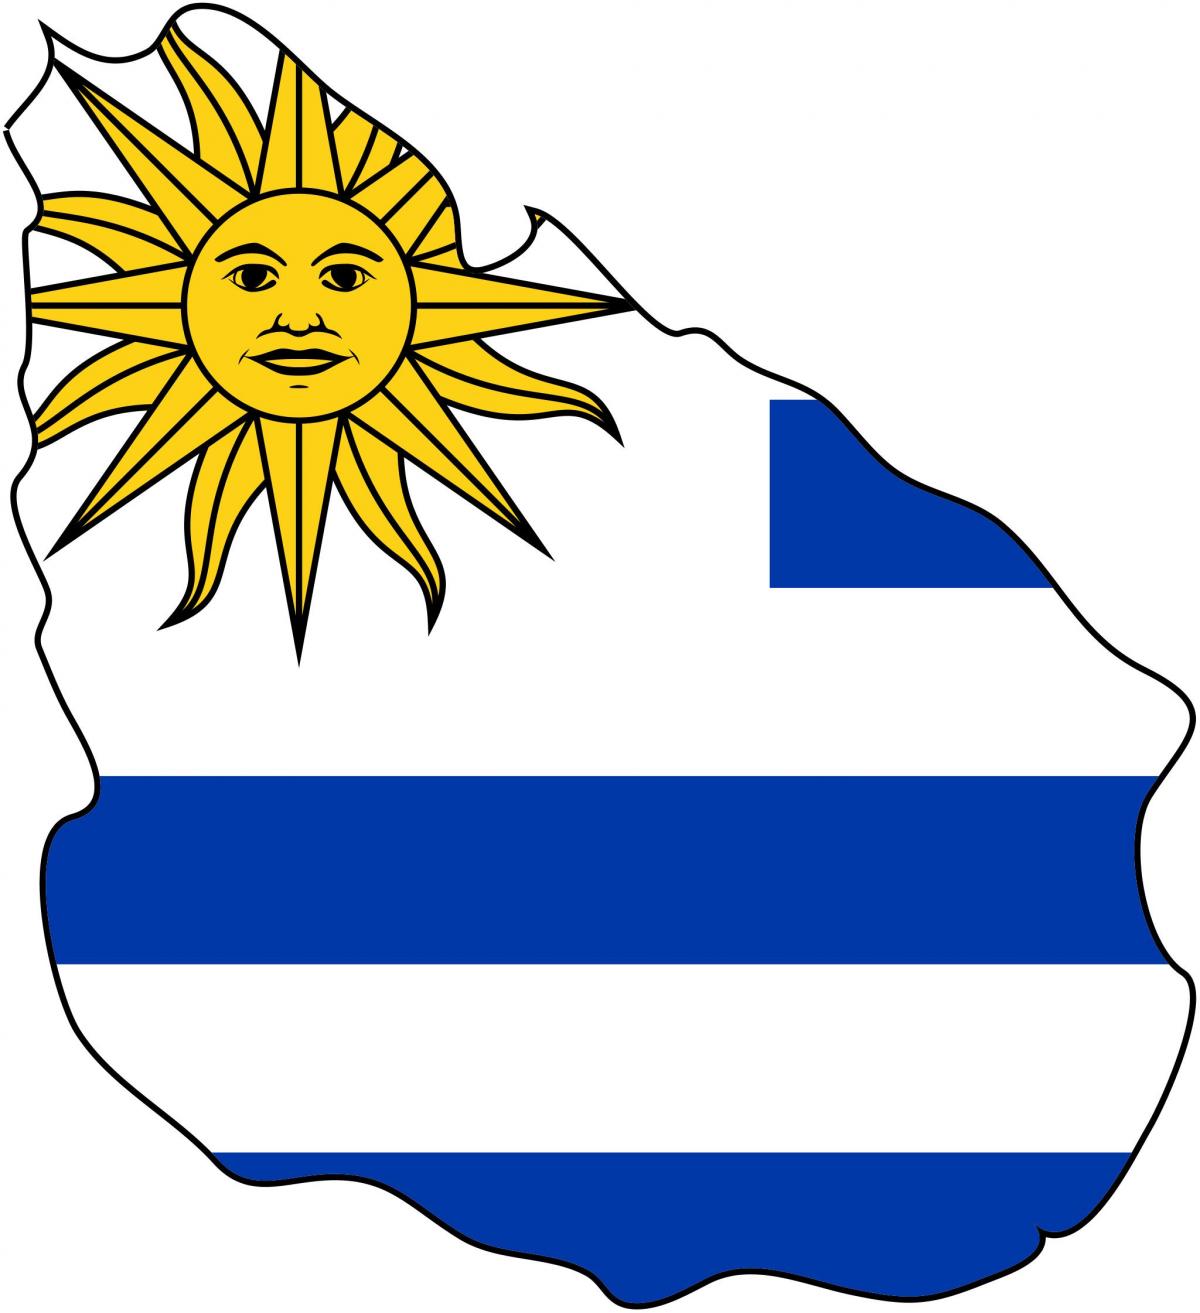 Mapa Uruguaj vlajka